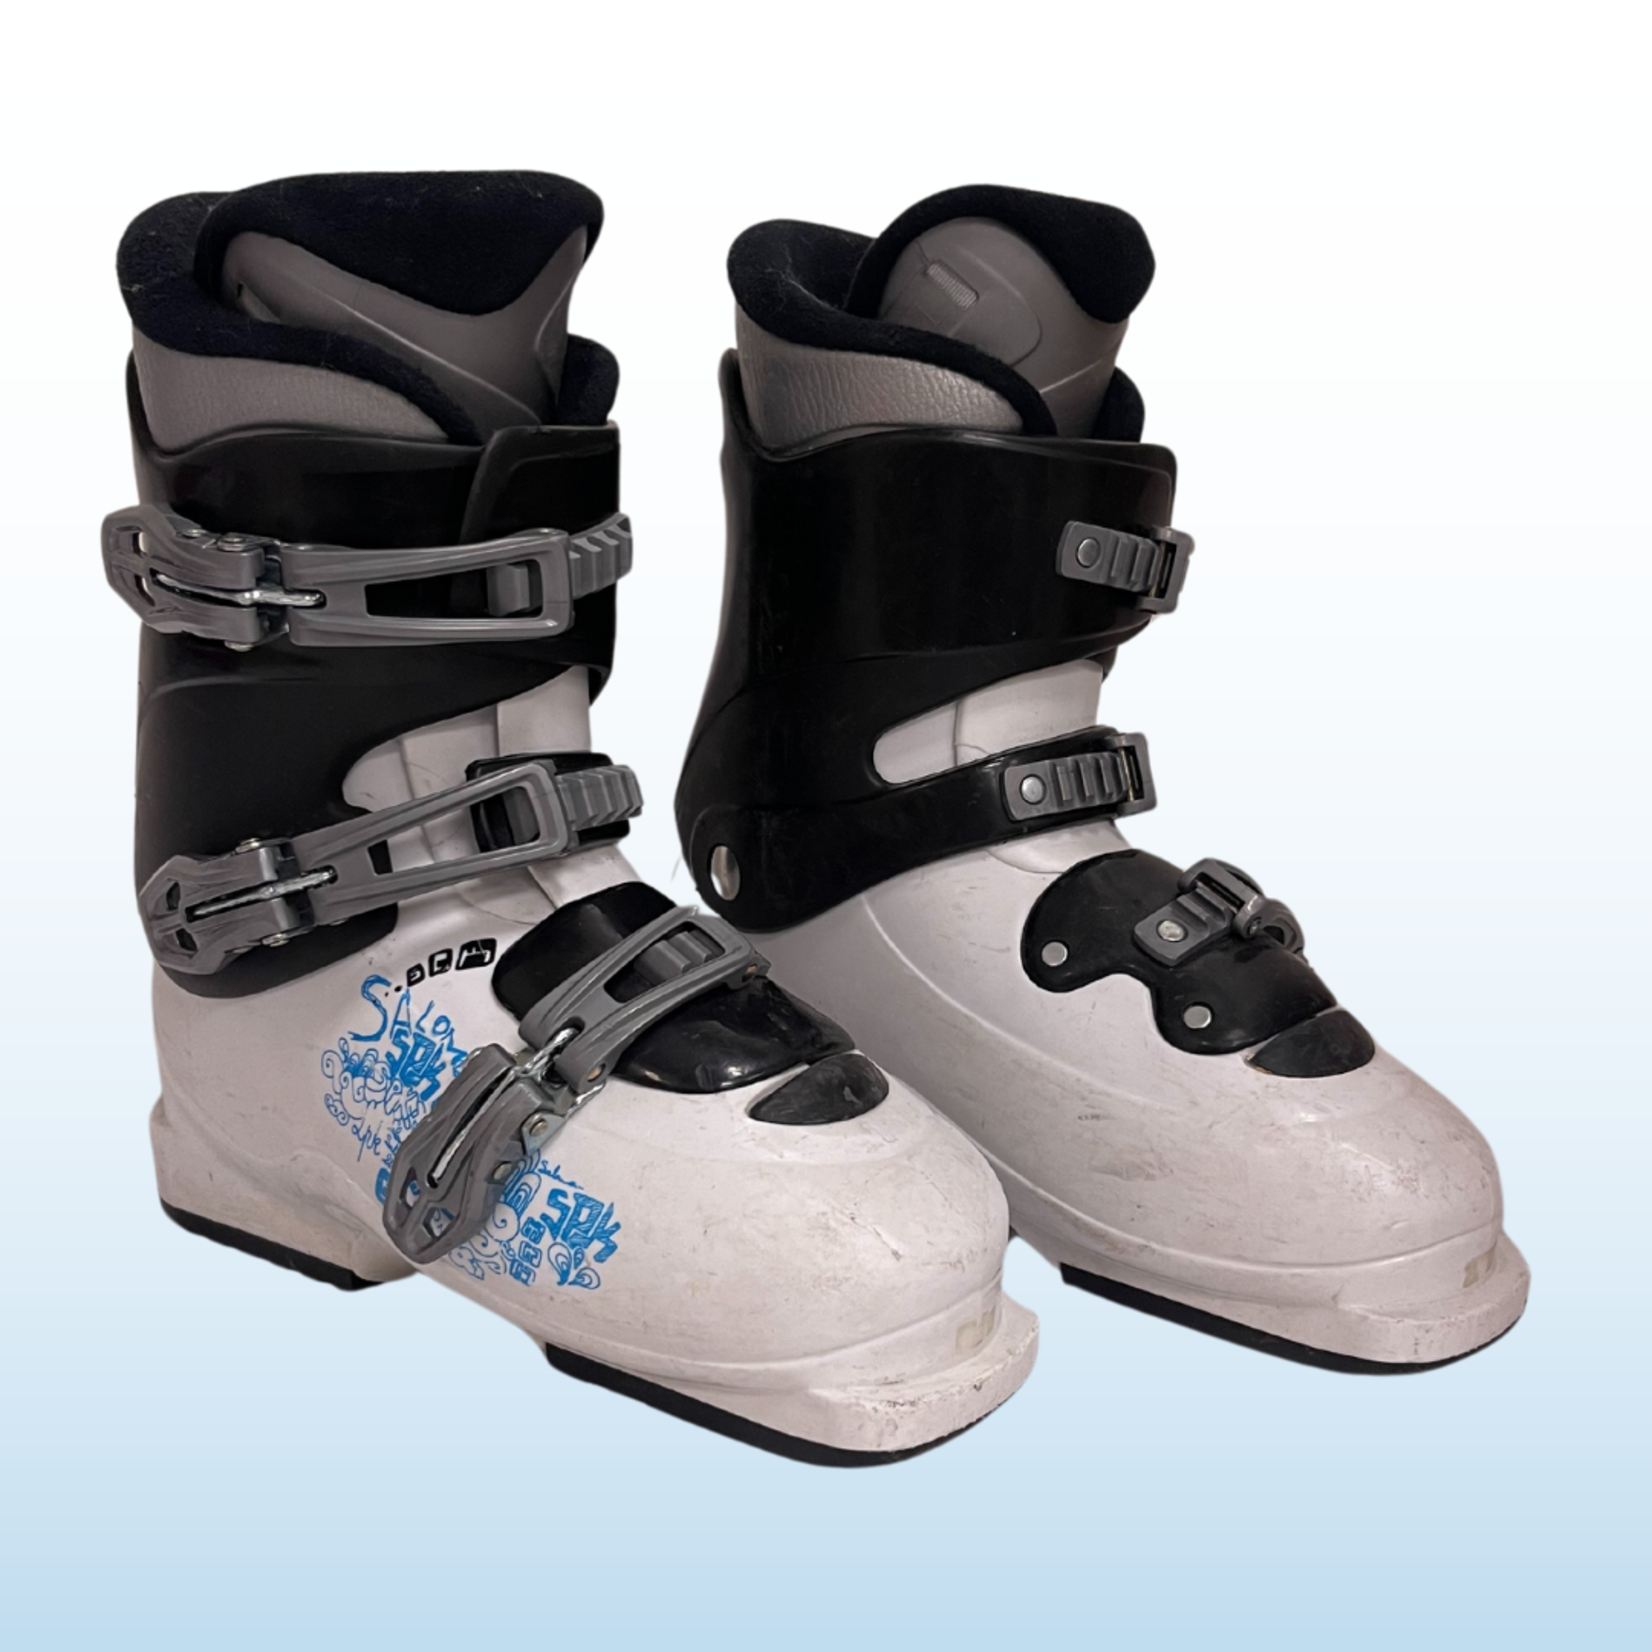 Salomon Salomon SPK Kids Ski Boots, Size 23.5